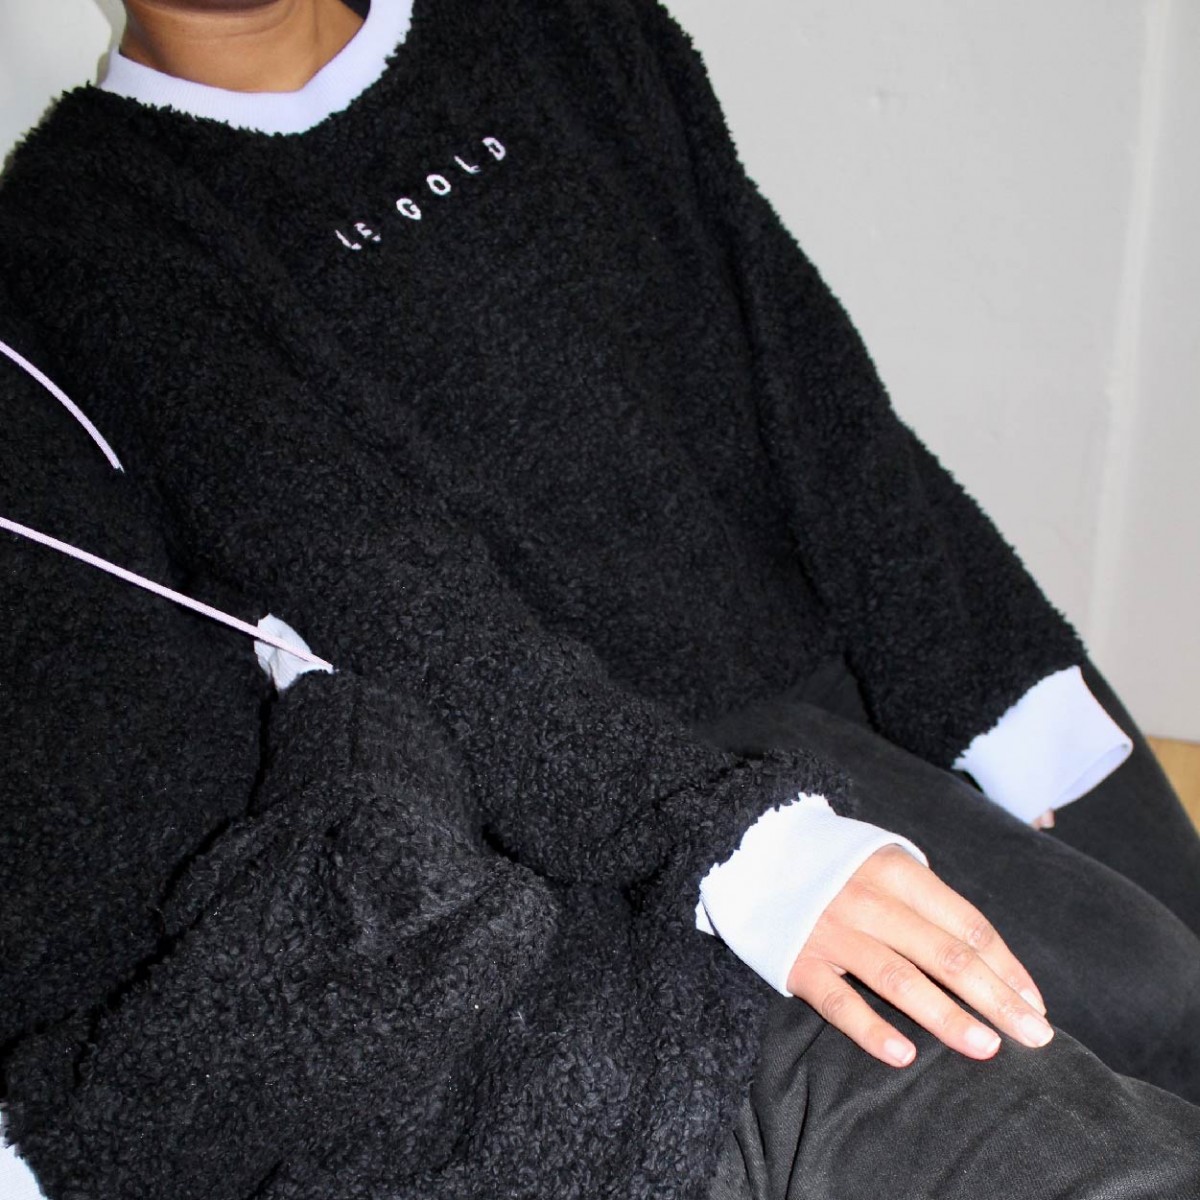 Black Teddy Sweater // LE GOLD